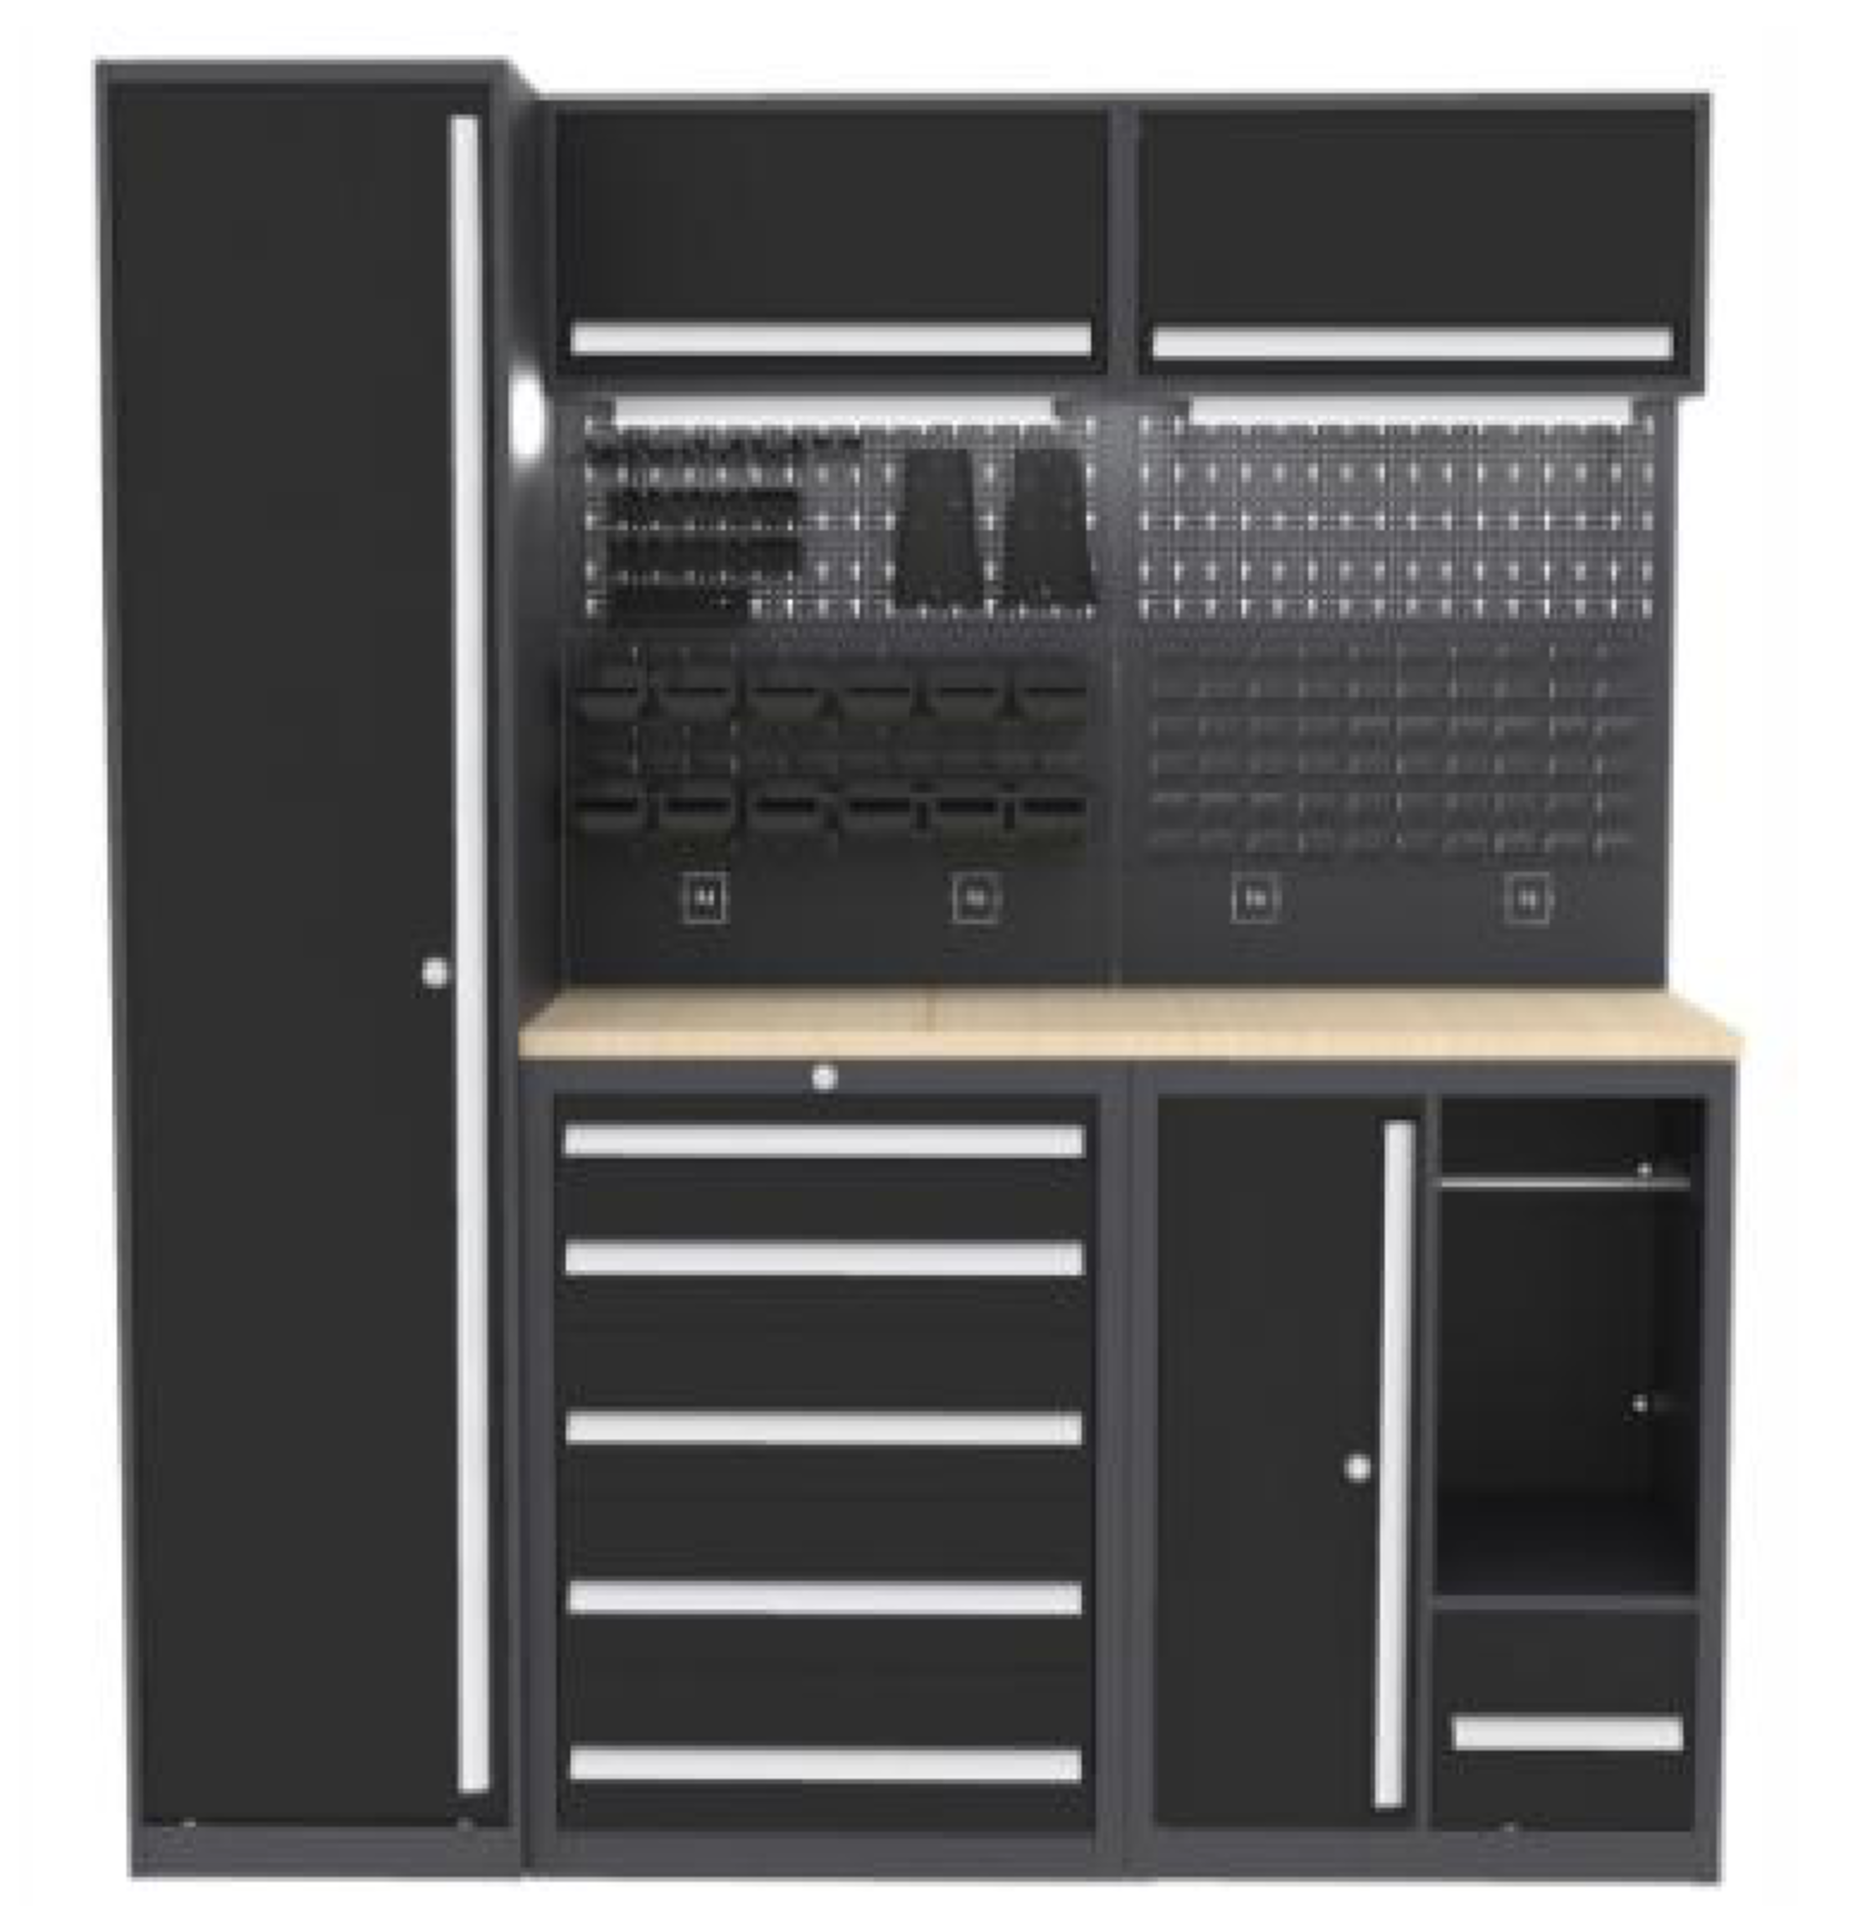 BRAND NEW Black Series Workshop/Garage CabinetsÊ width 2000mm height 2025mm depth 550mm Consists